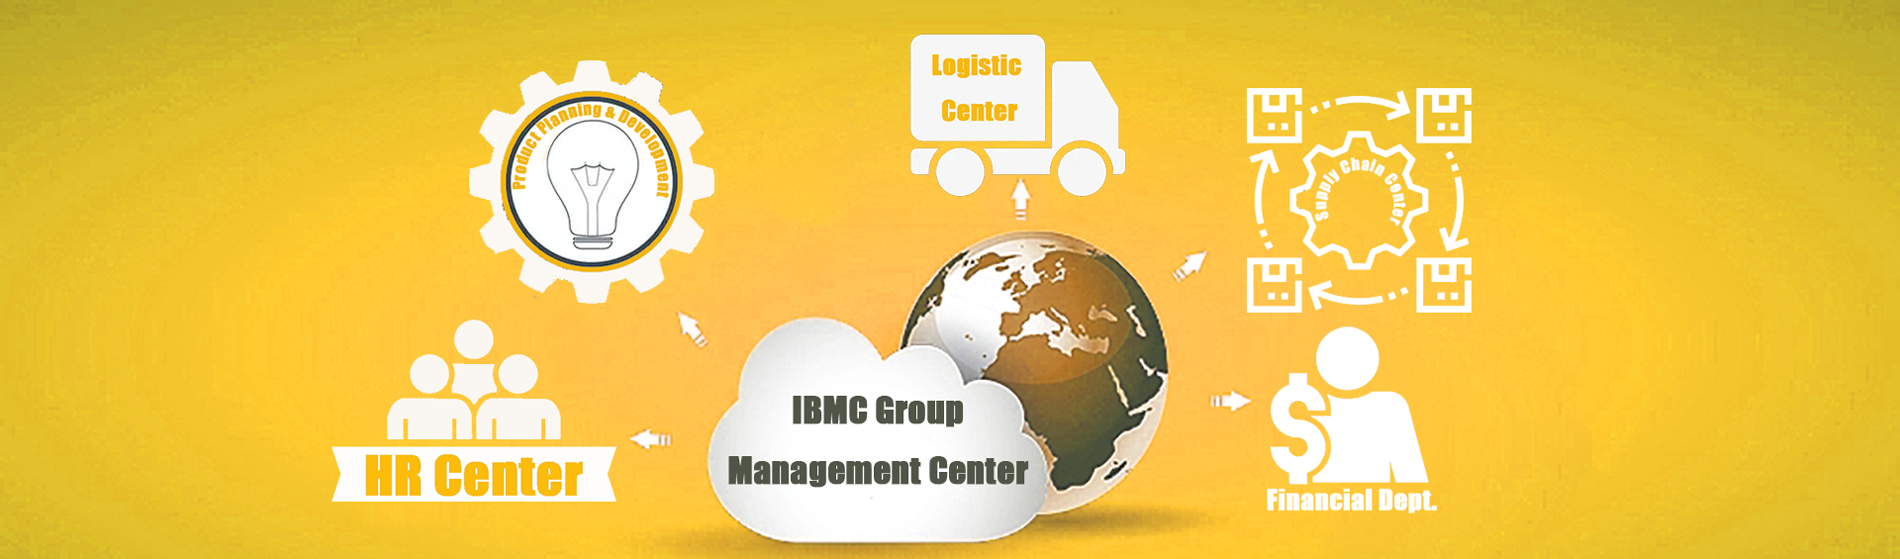 IBMC Group Management Center